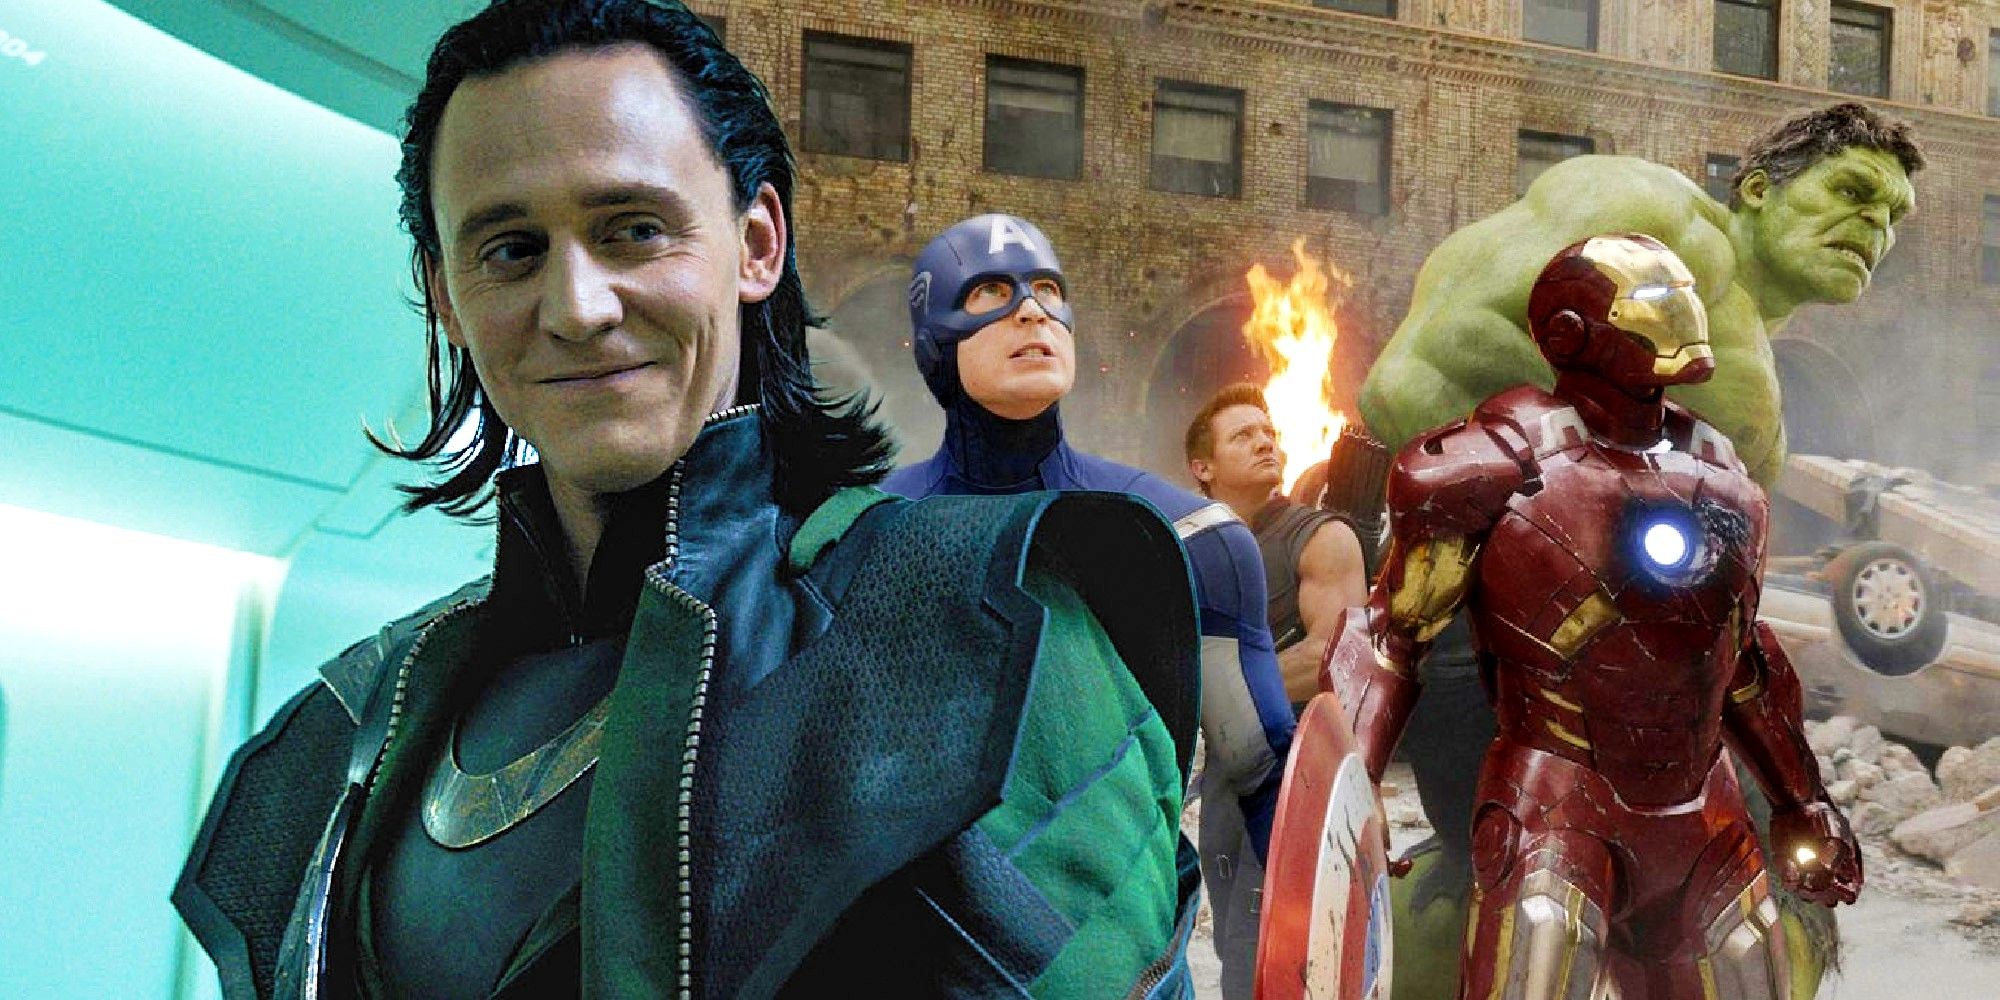 Loki and The Avengers